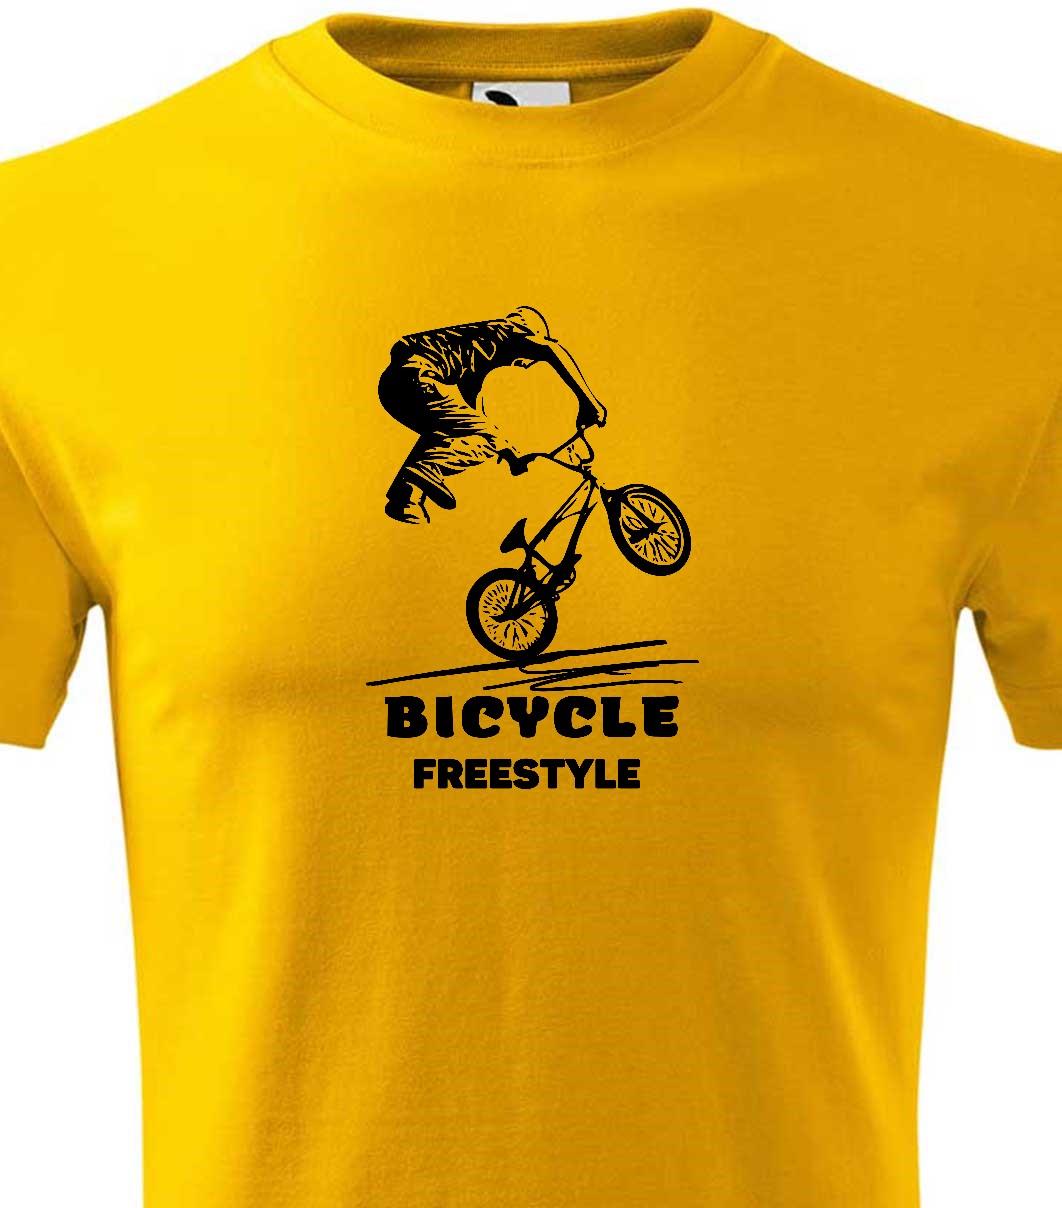 Bicycle freestyle gyerek póló